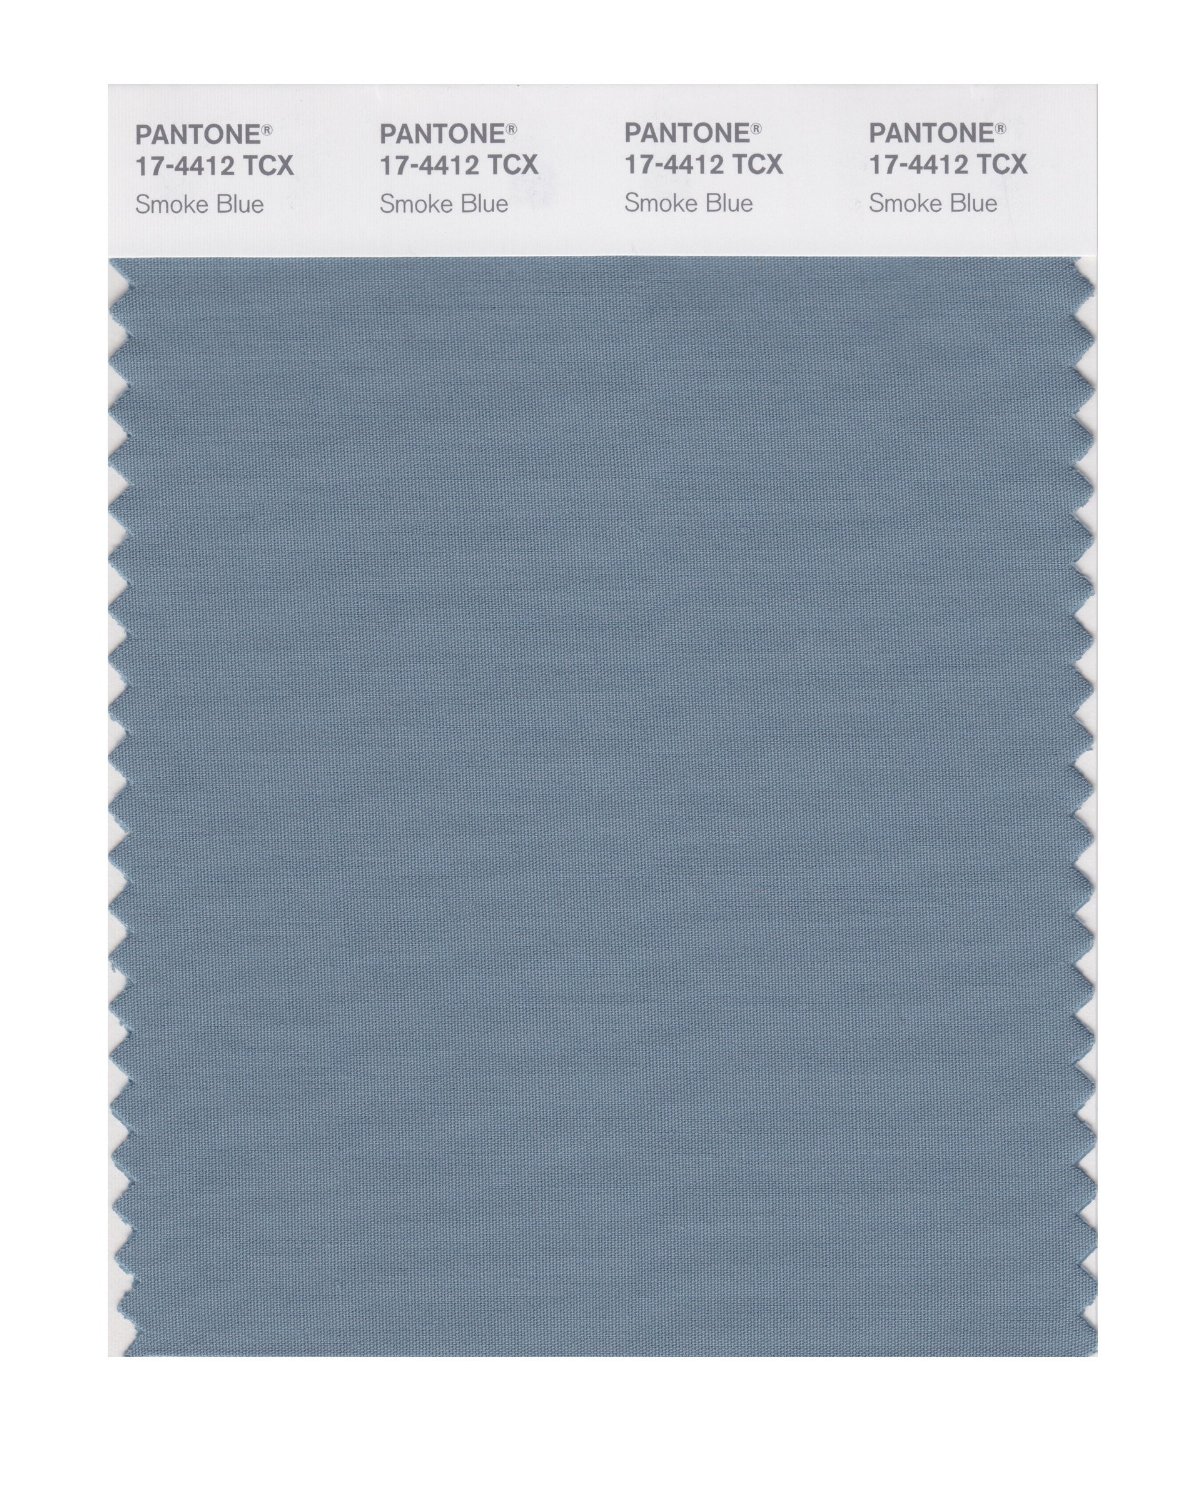 Pantone Cotton Swatch 17-4412 Smoke Blue